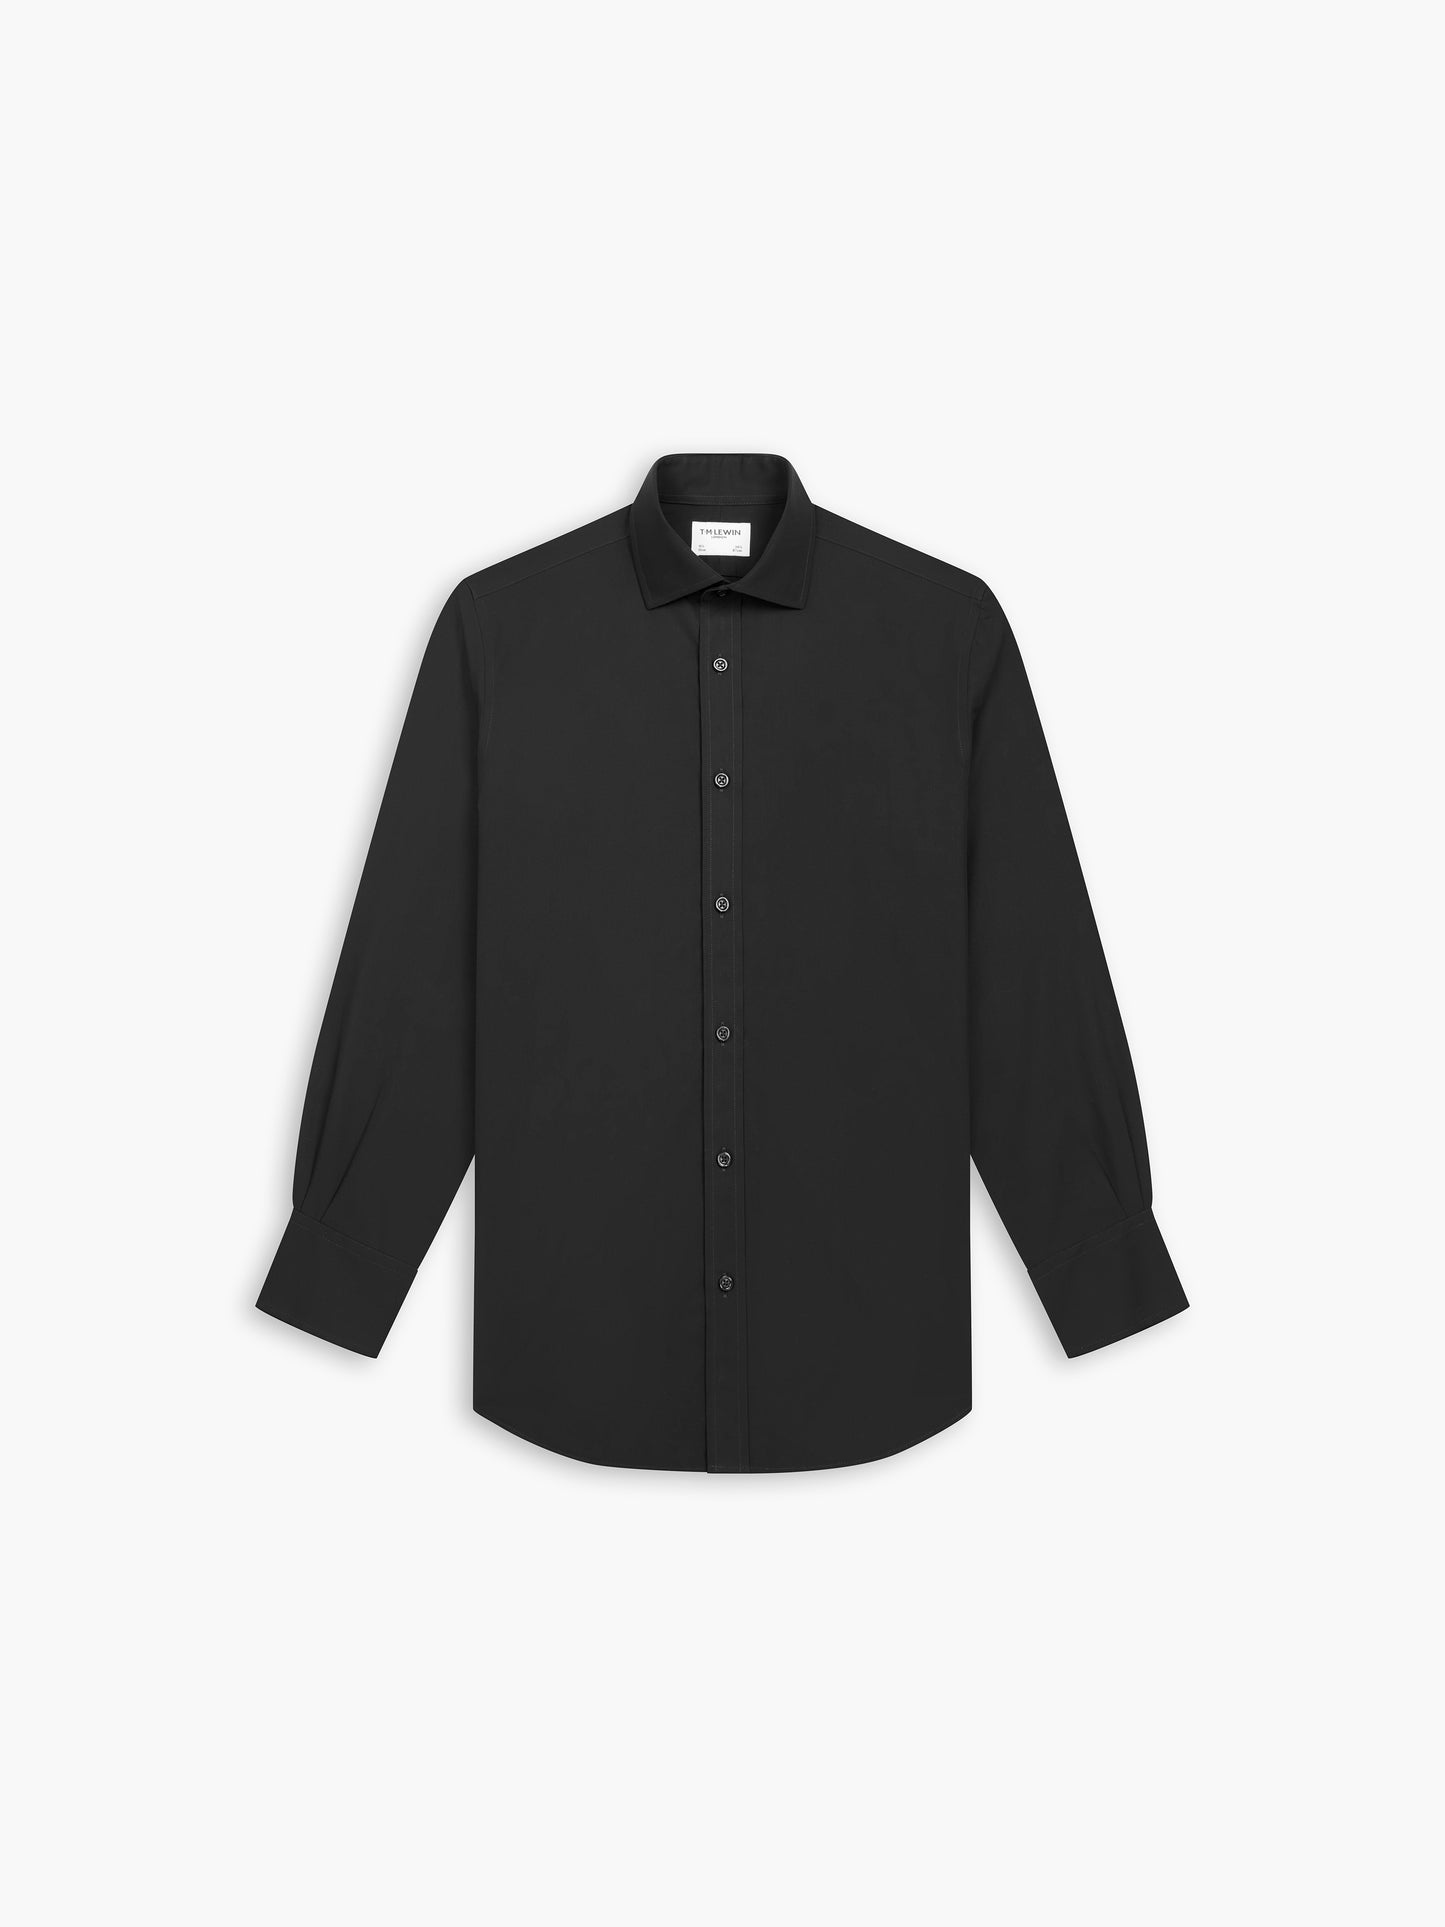 Non-Iron Black Poplin Slim Fit Single Cuff Classic Collar Shirt